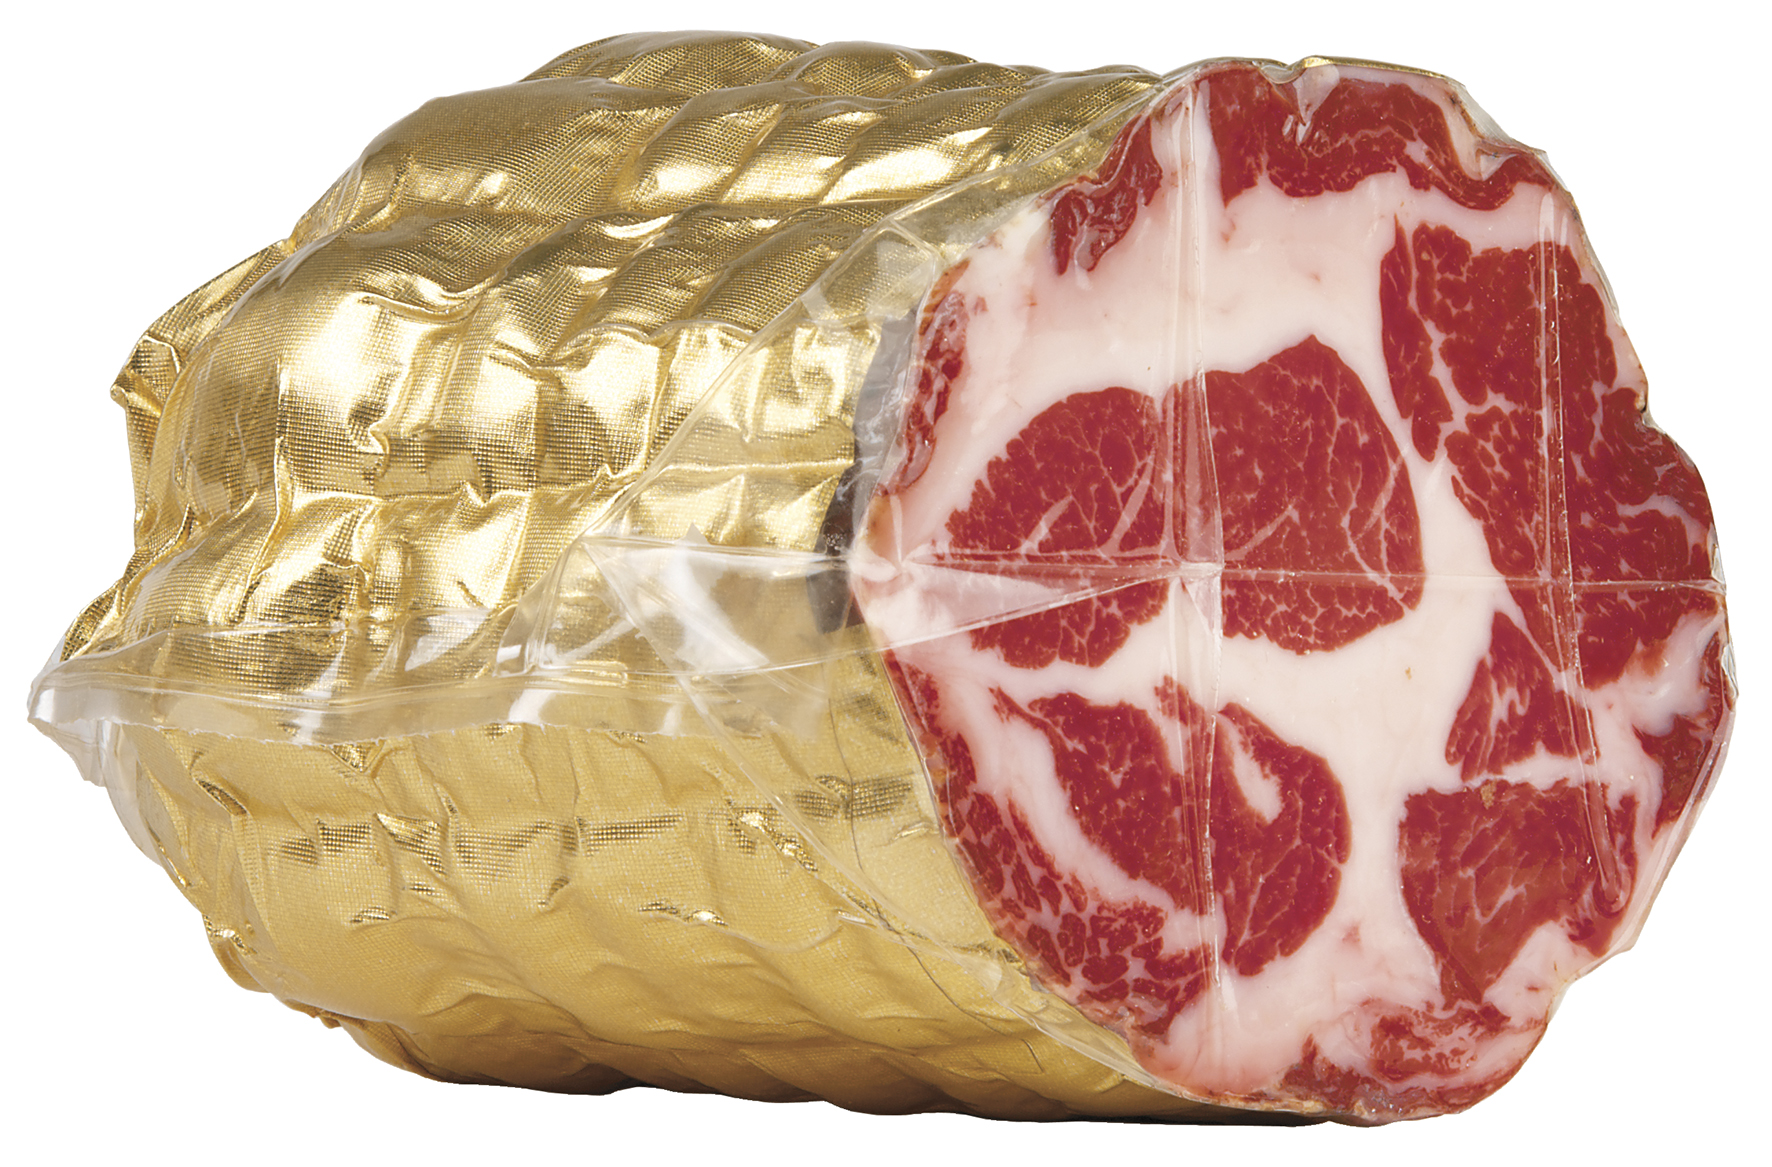 Gualerzi coppa di Parma pelata PDI 5kg. Whole Coppa Di Parma, already de-skinned and vacuum packed and ready to slice